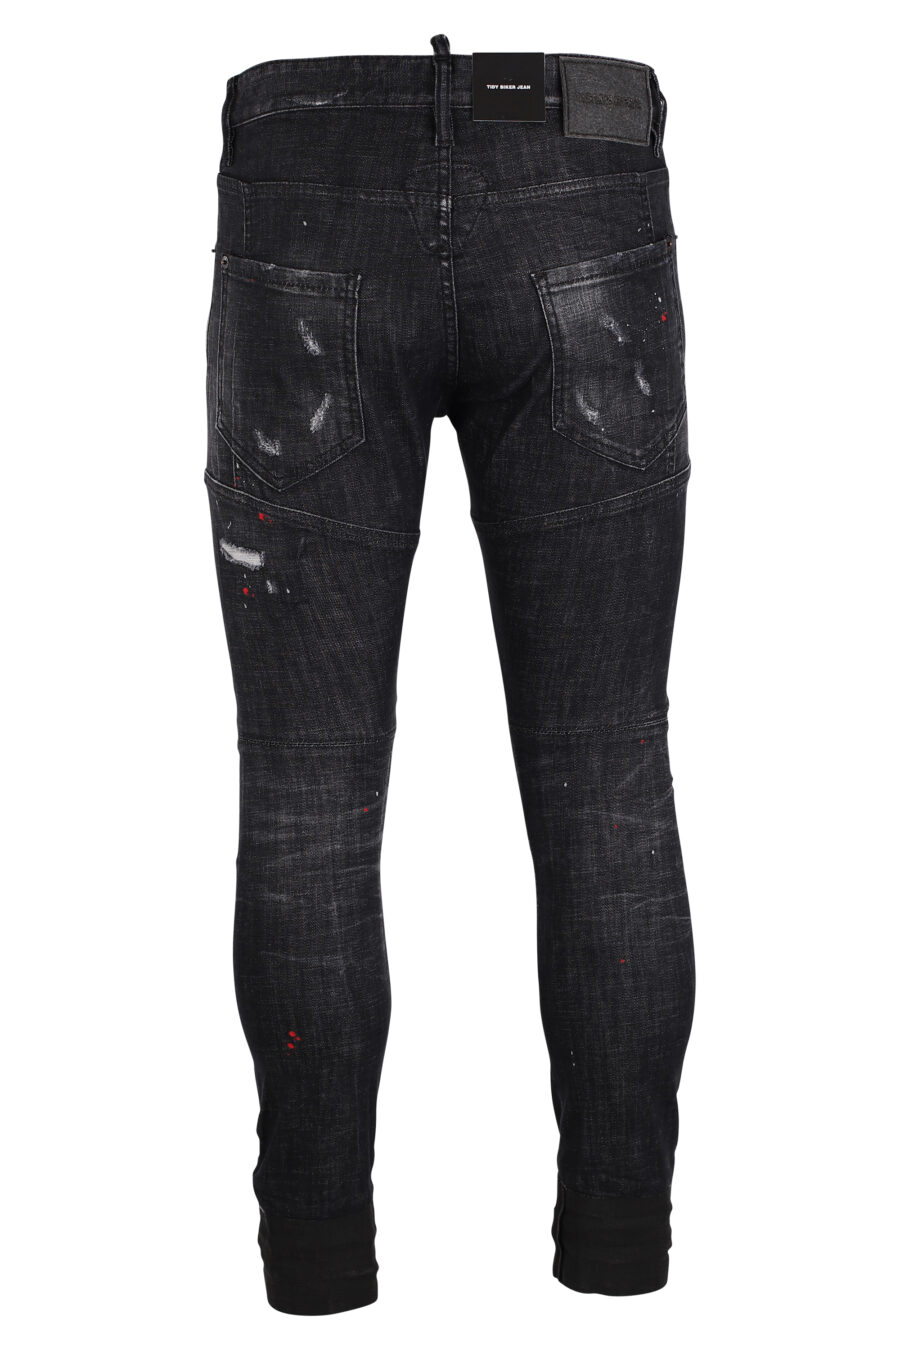 Tidy biker jeans black worn - IMG 4071